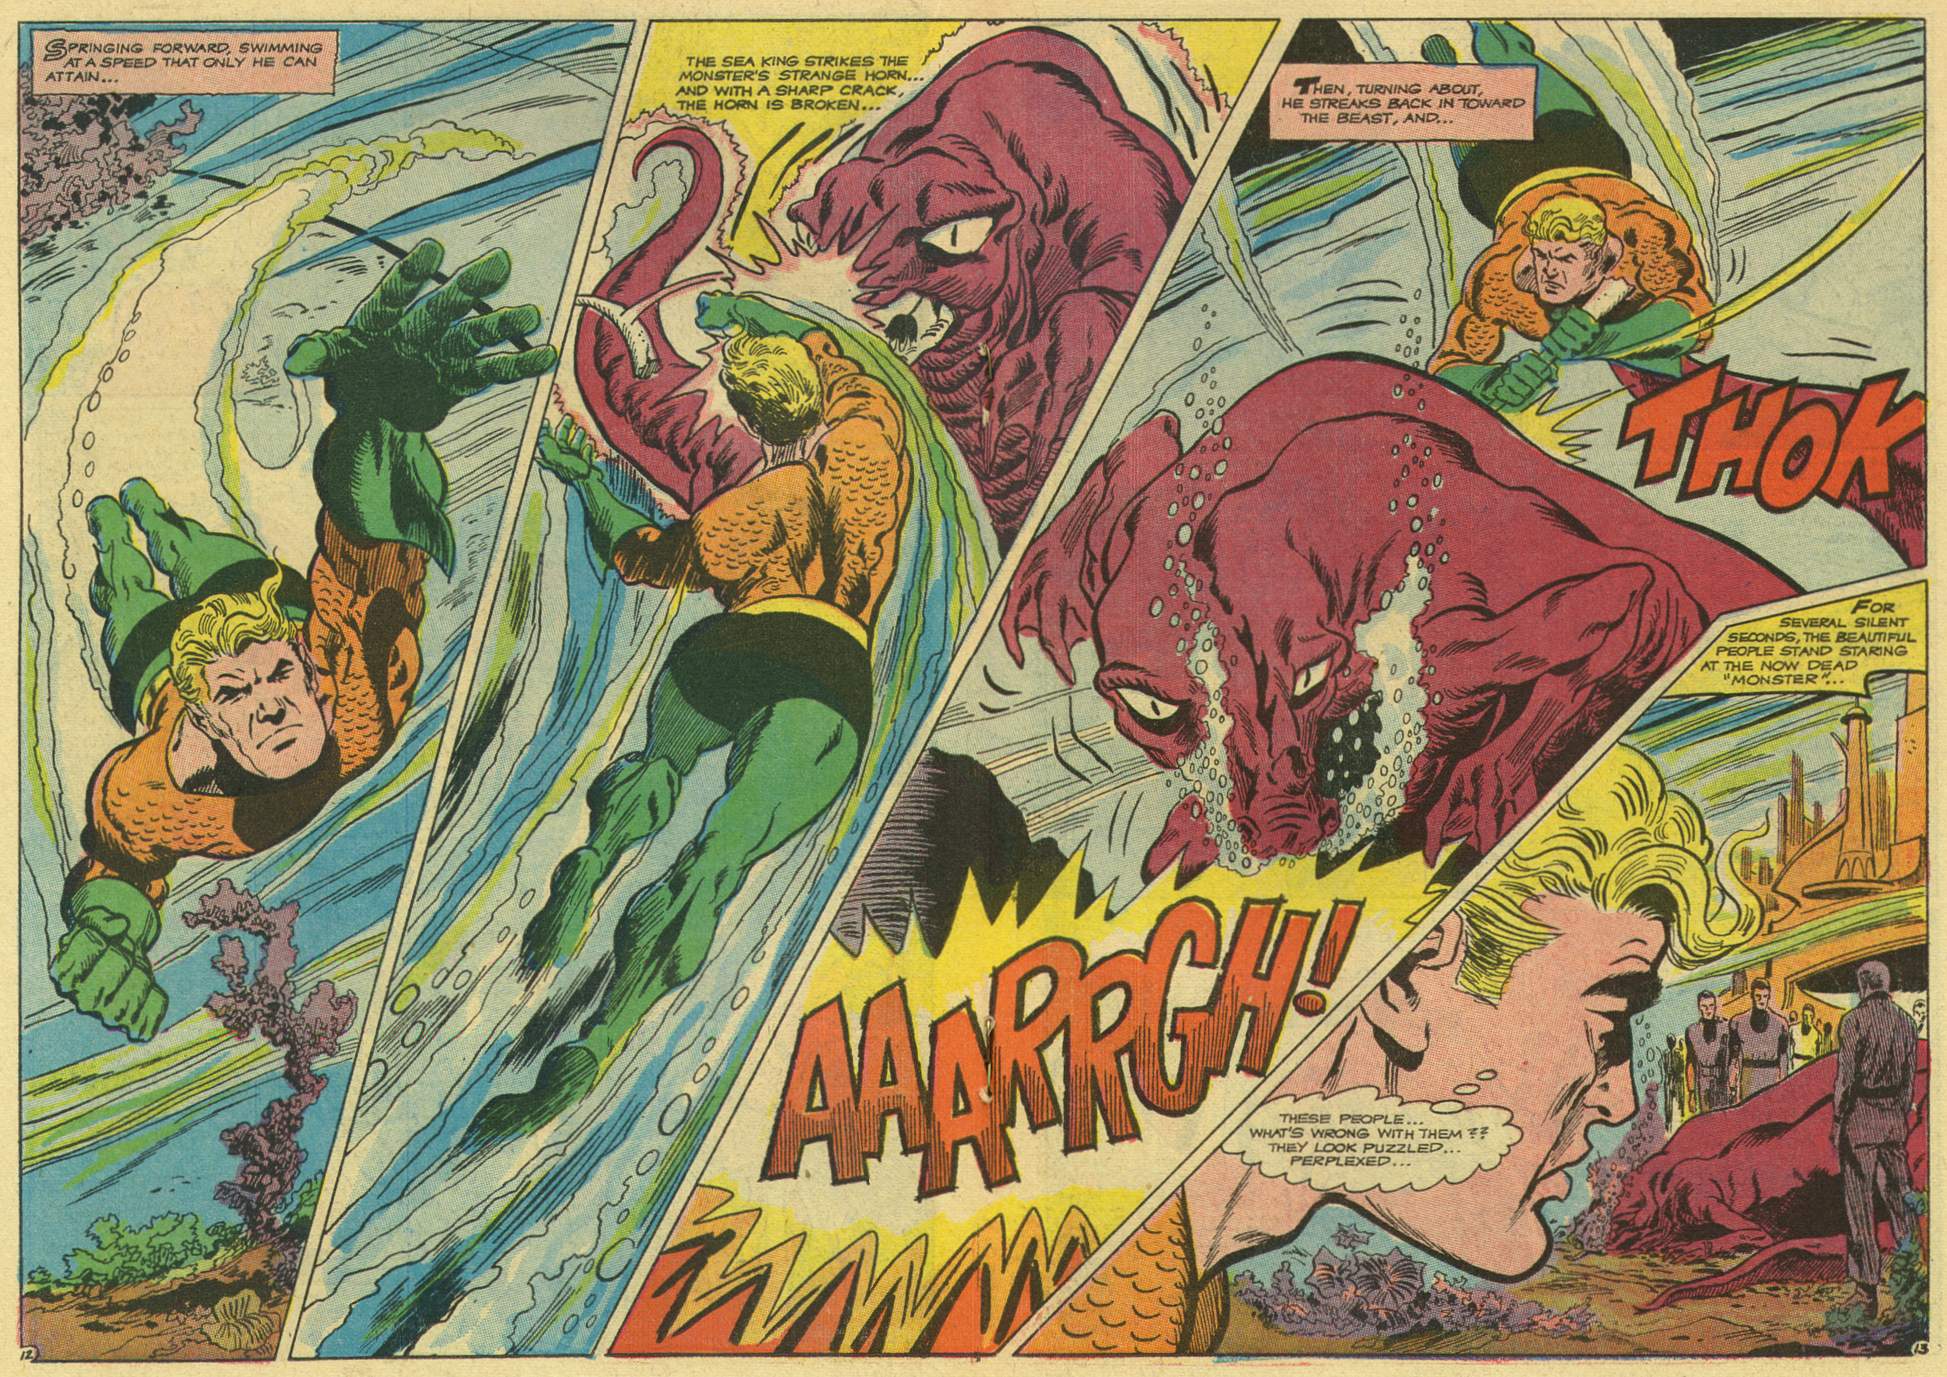 Aquamam #41 by Steve Skeates, Jim Aparo, and Dick Giordano